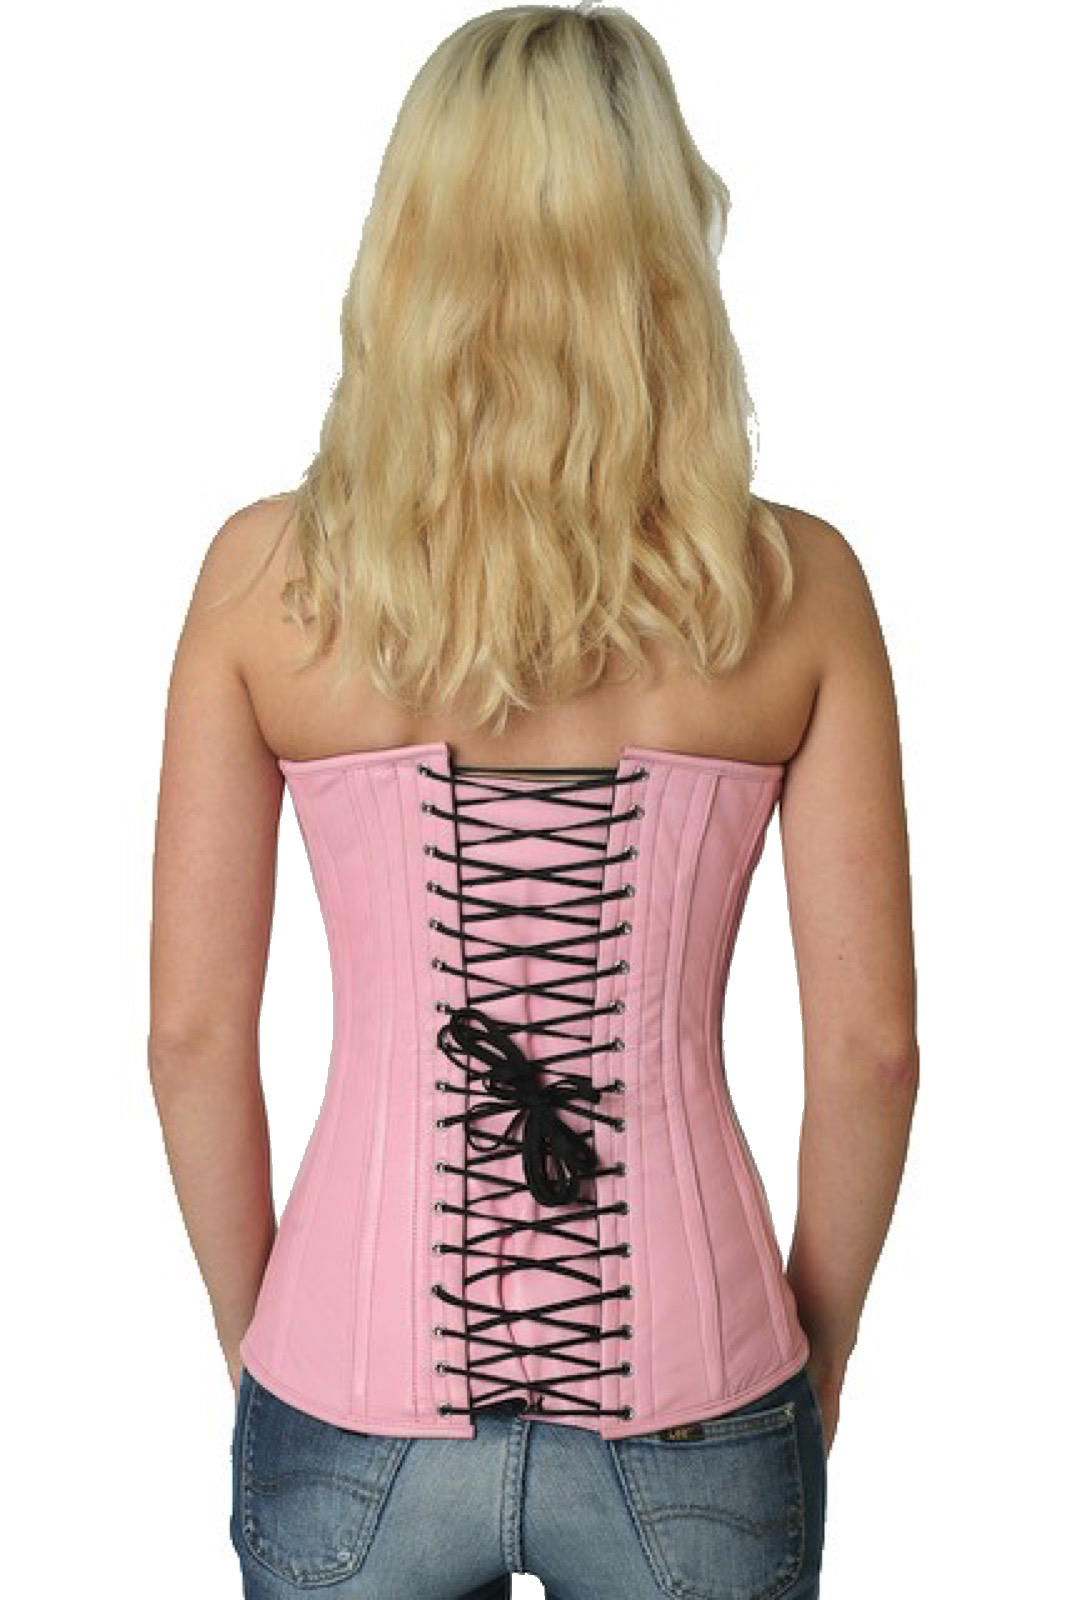 Corse rosa cuero sobre pecho corset ly22